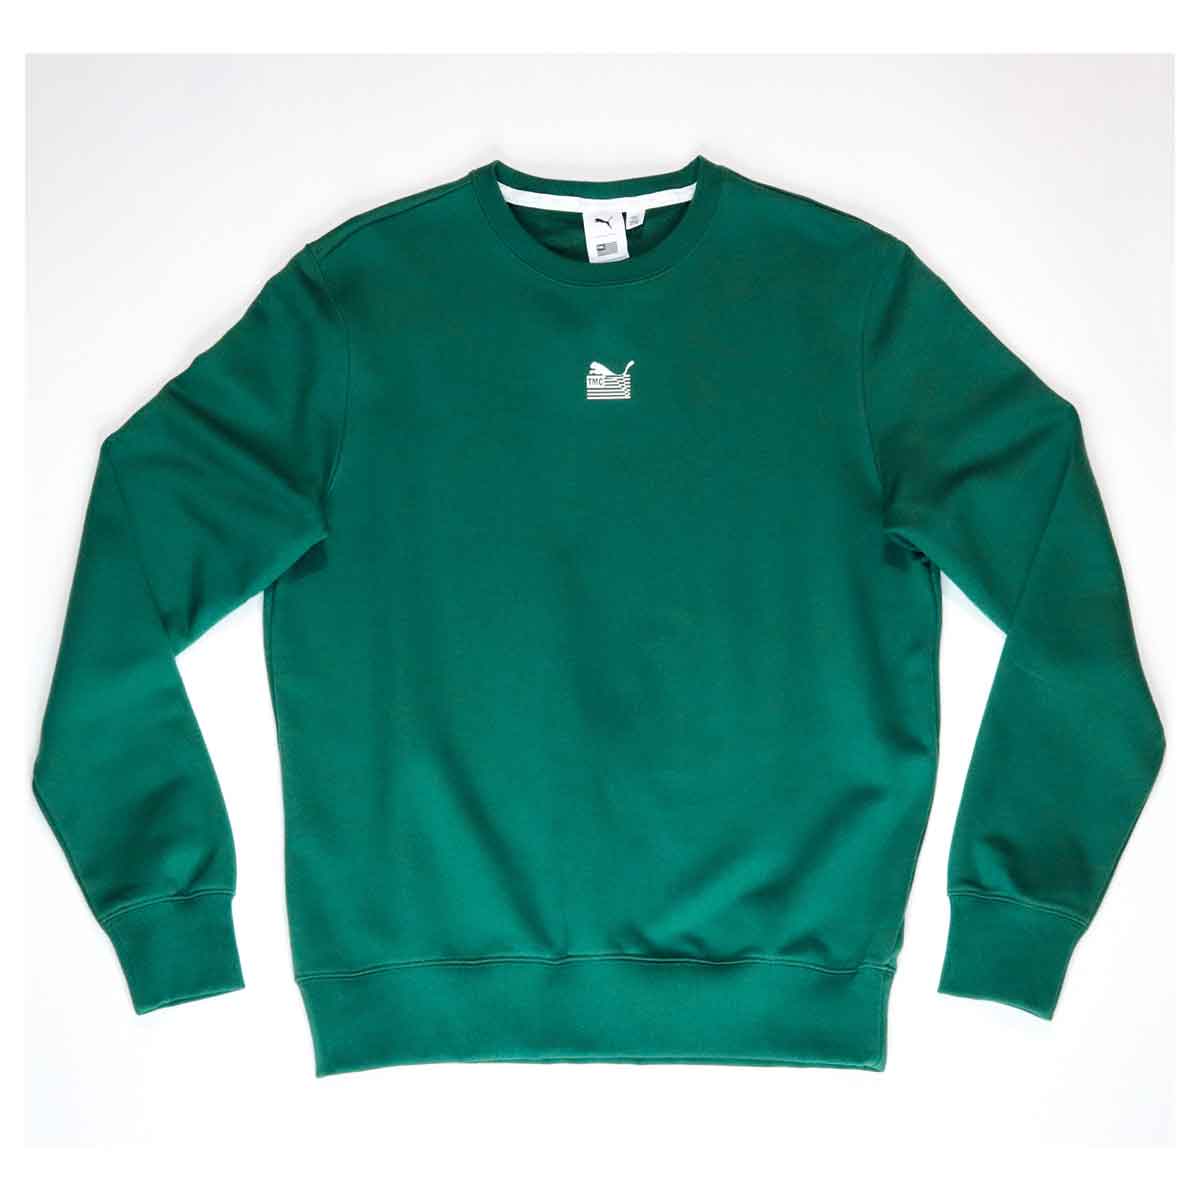 PUMA x TMC Everyday Hussle Crewneck Sweater - On The Run Green